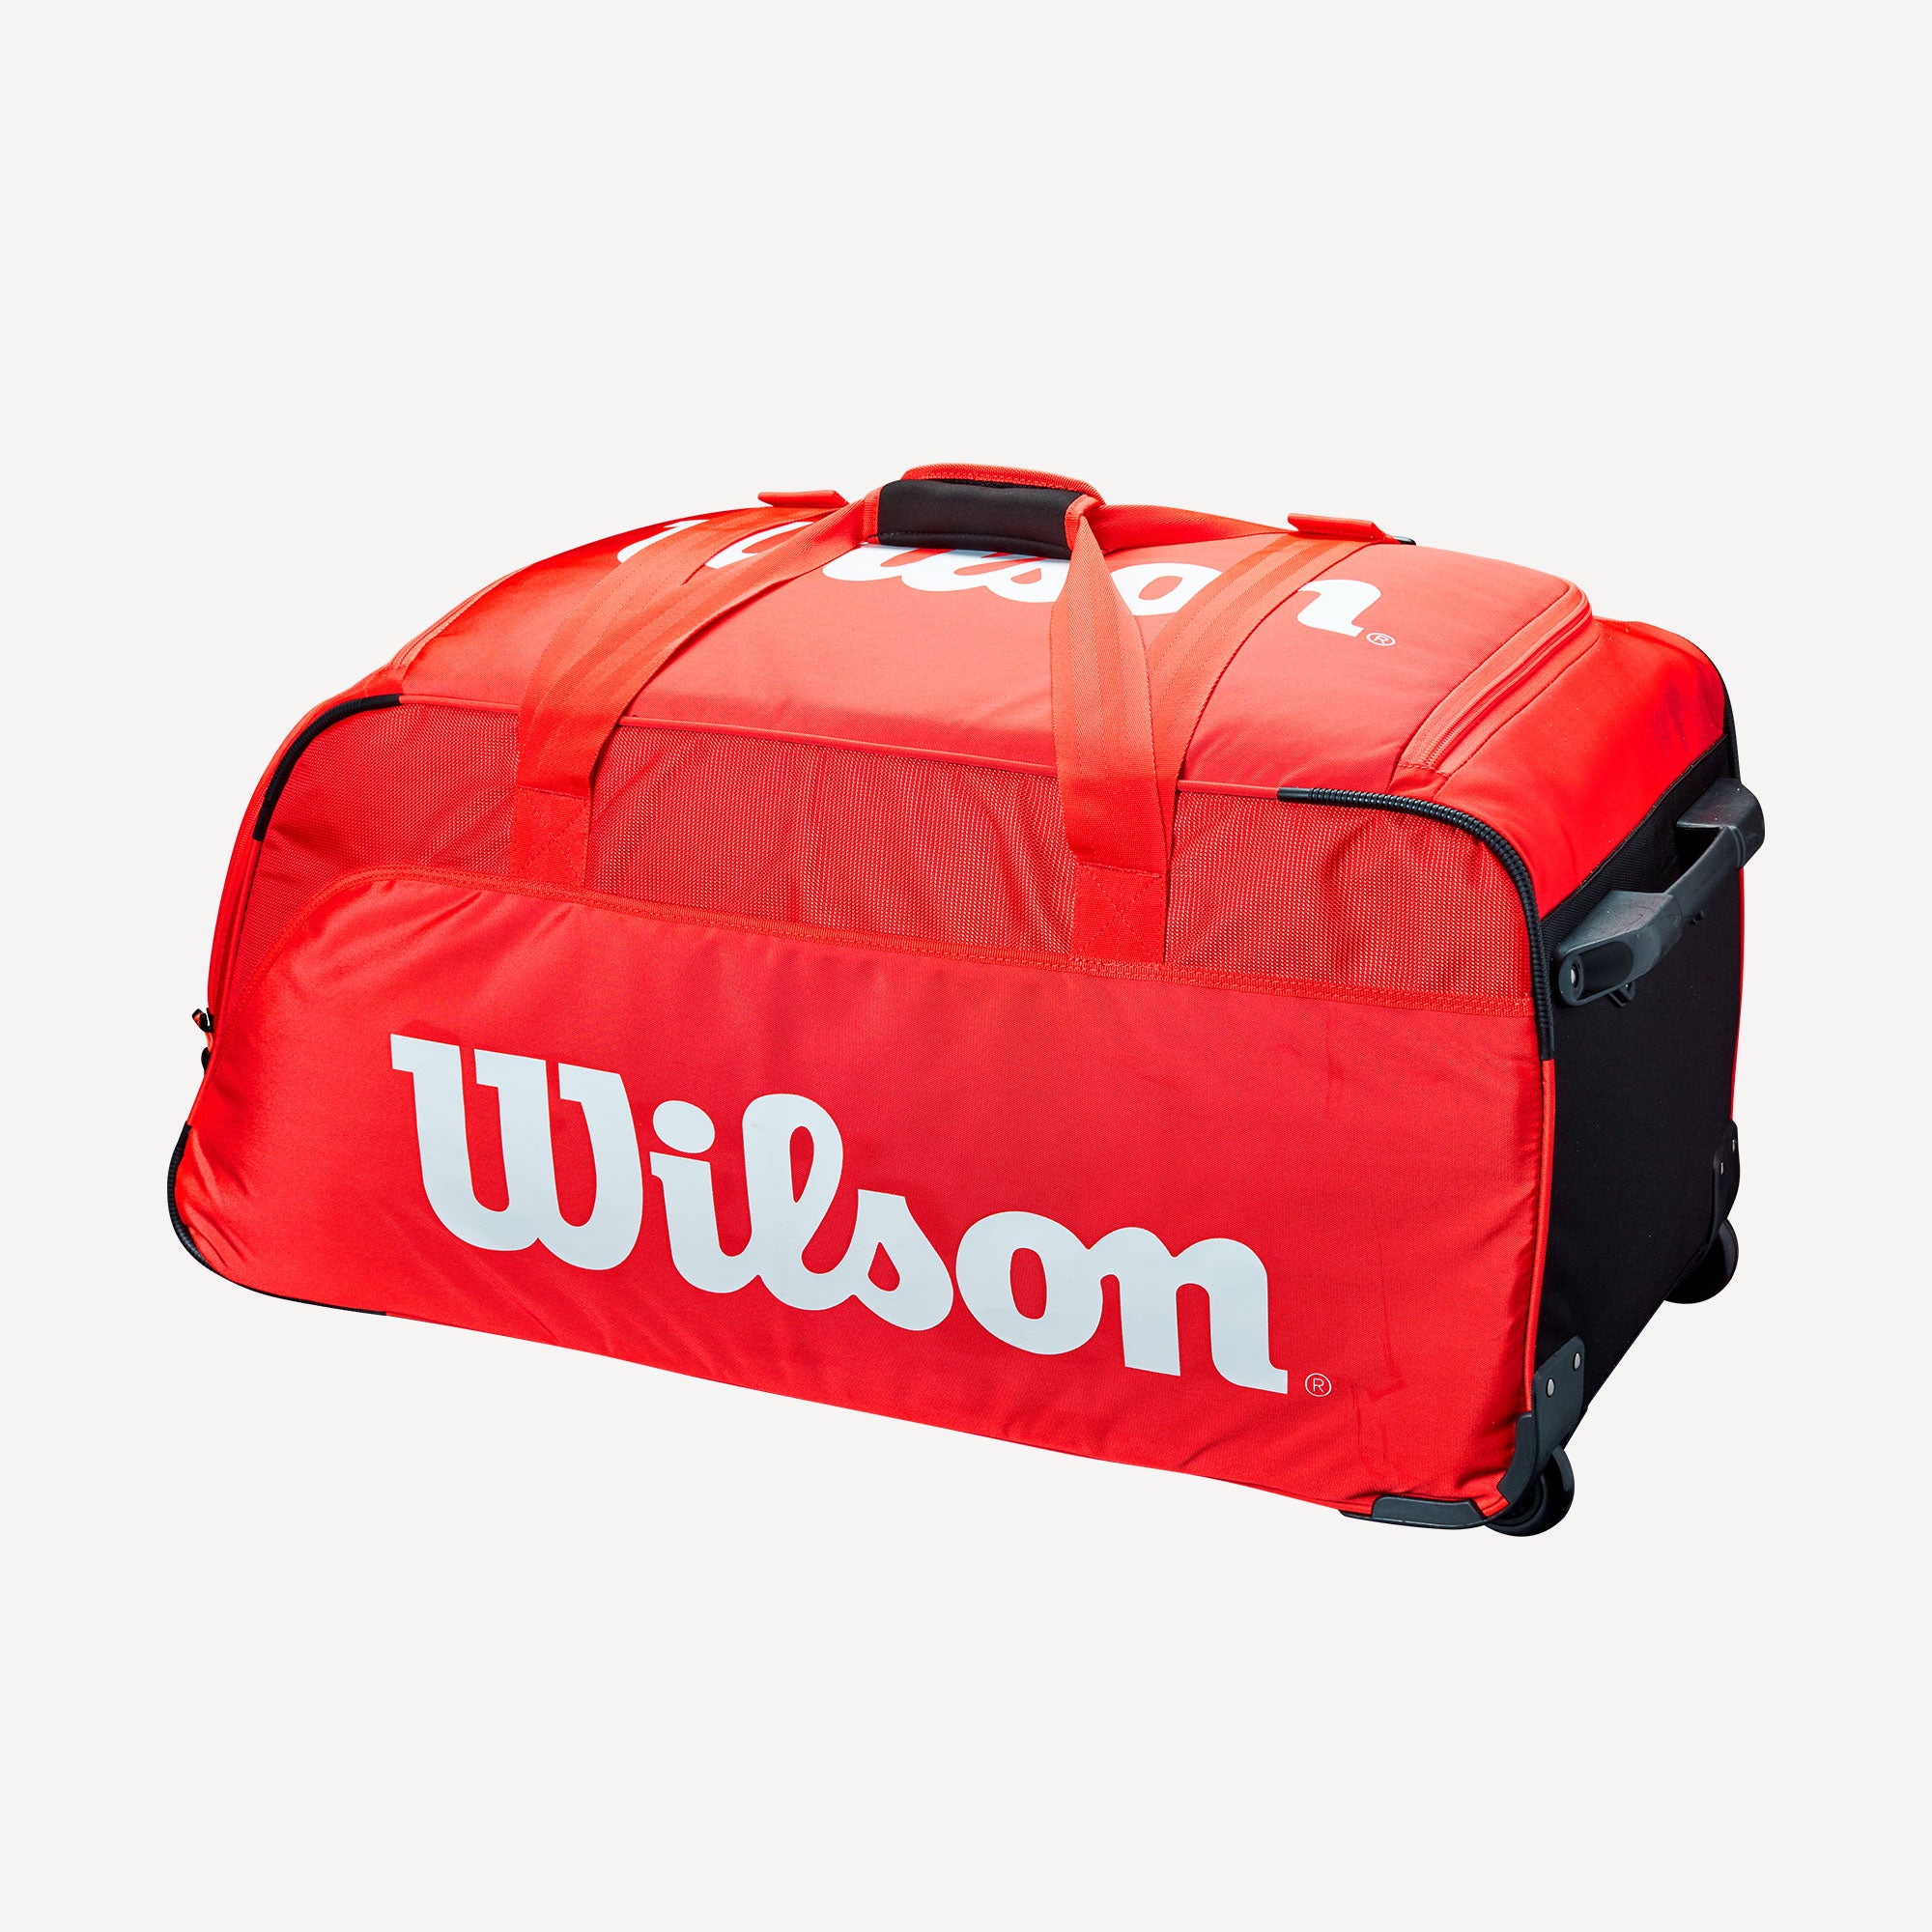 Wilson Super Tour Tennis Travel Bag Red (1)